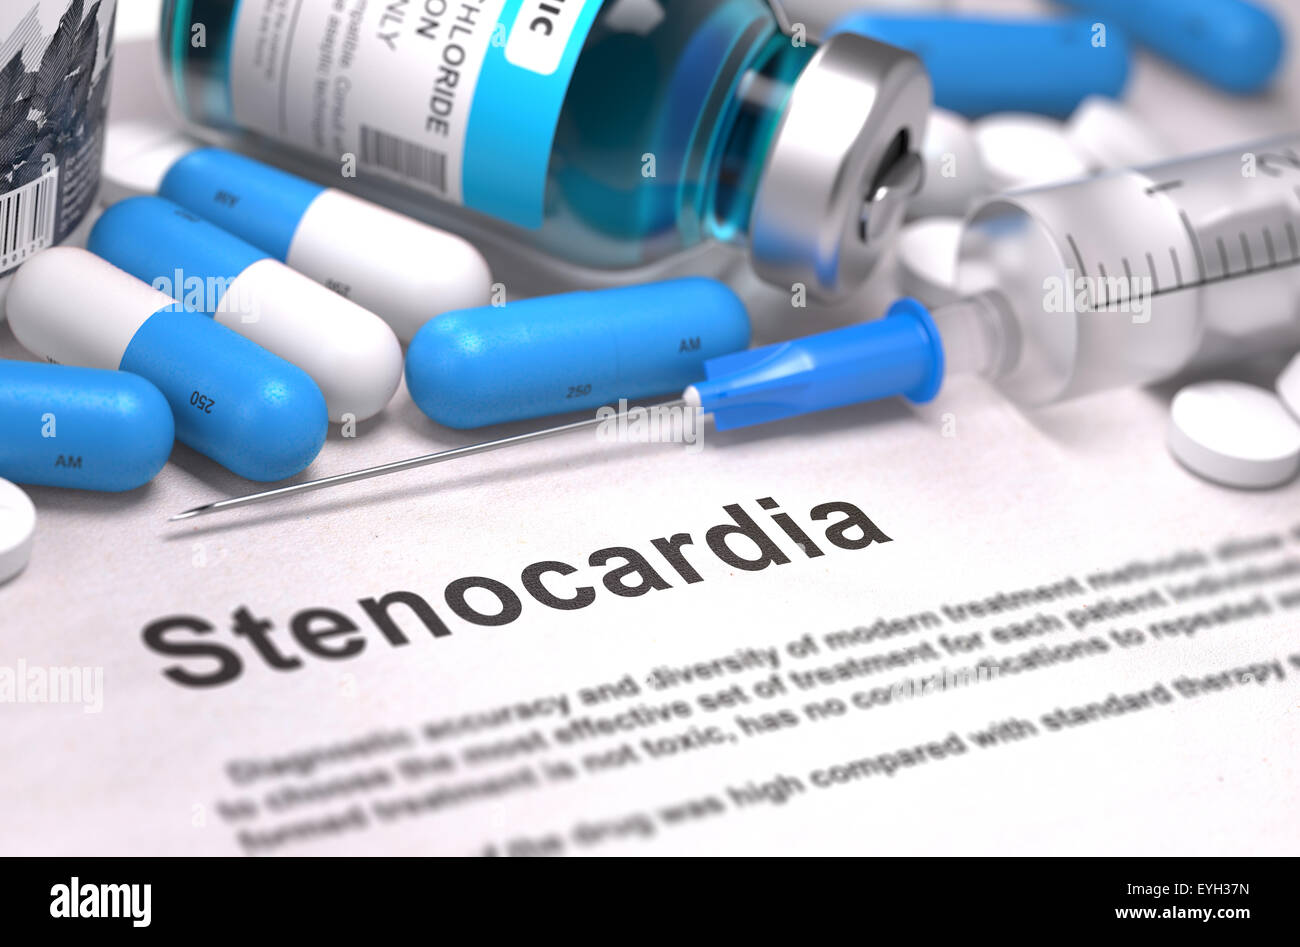 Stenocardia Diagnosis. Medical Concept. Stock Photo